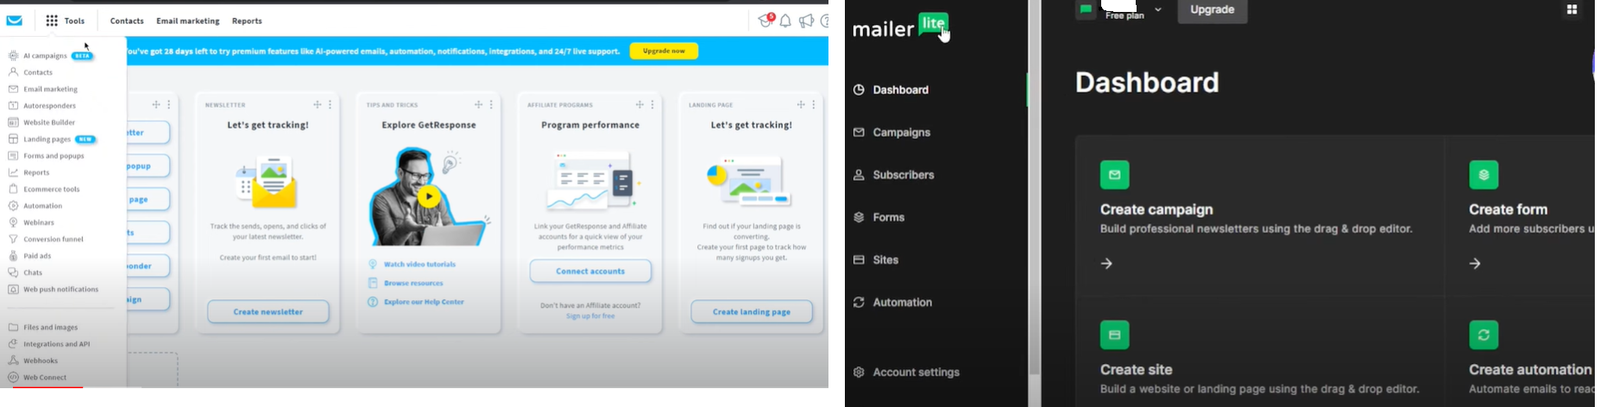 GetResponse VS MailerLite User Interface